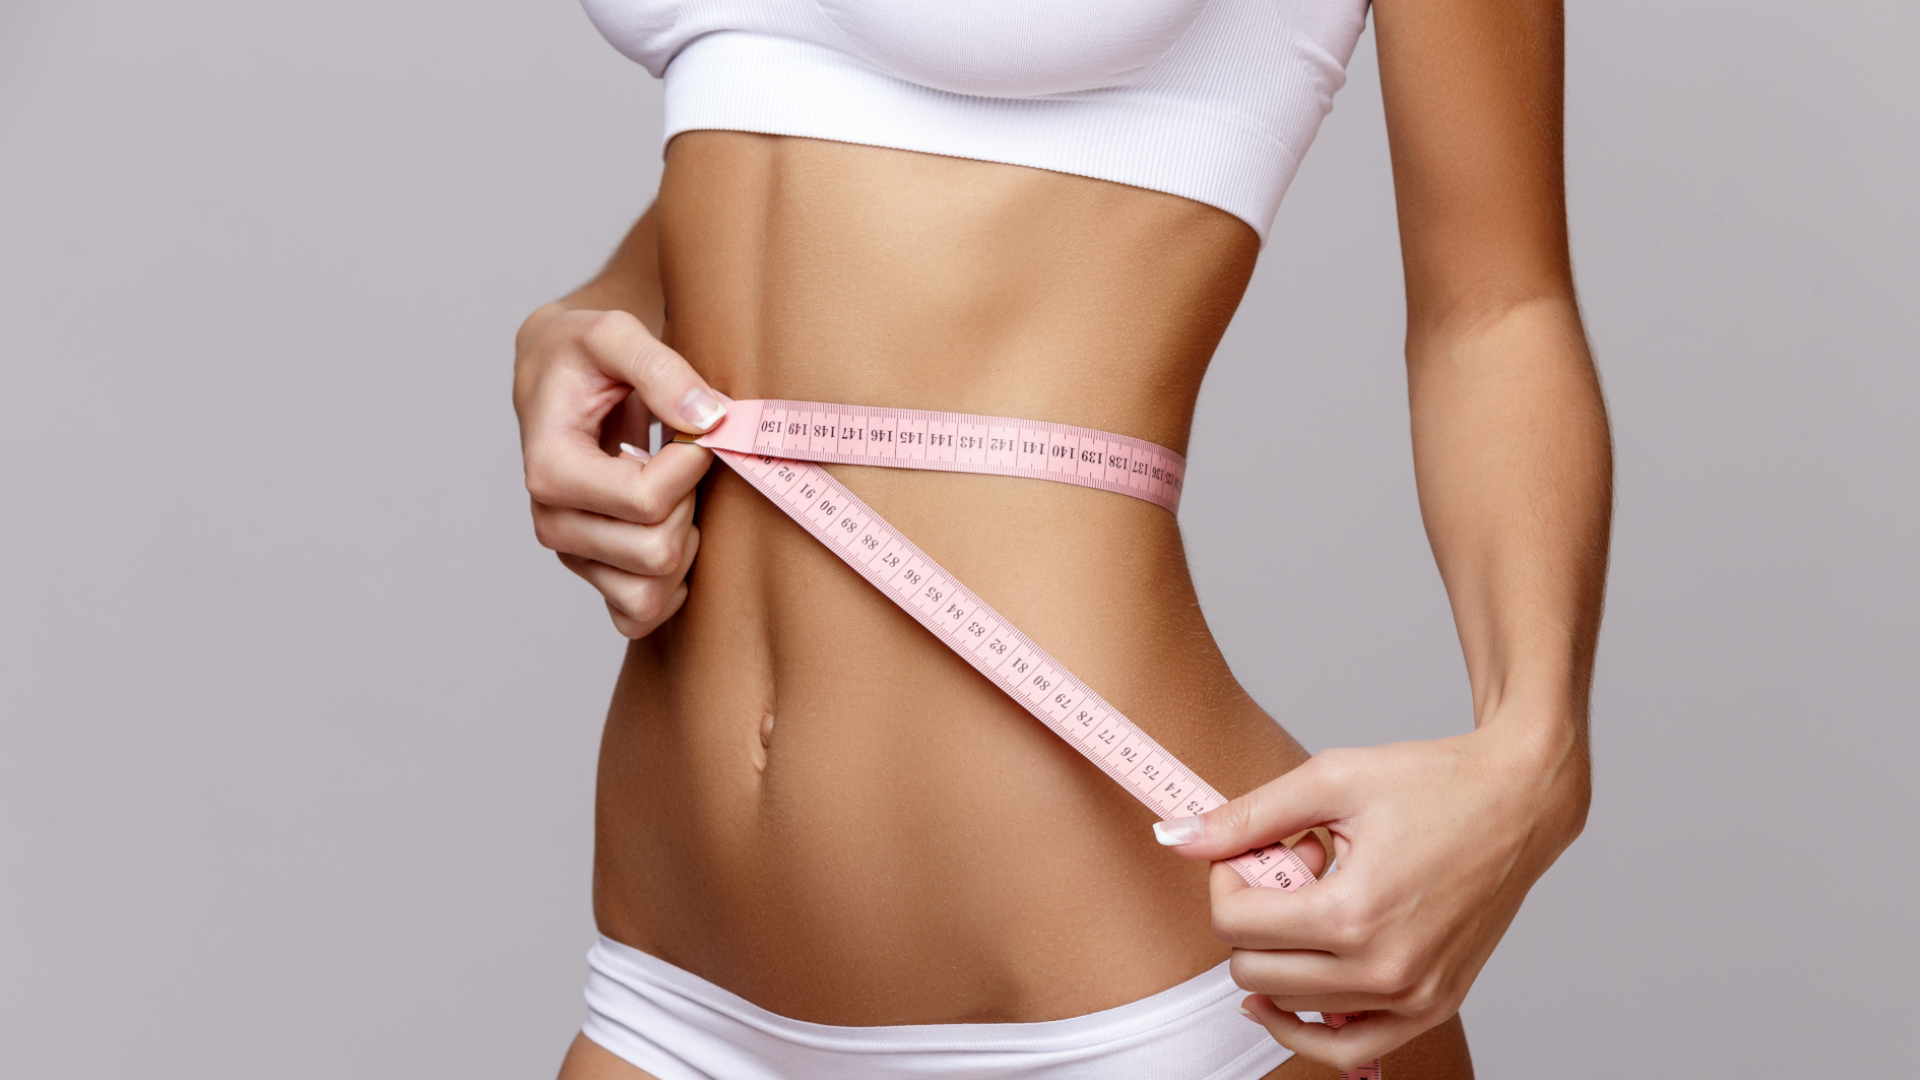 Woman has 10 or 15 percent body fat